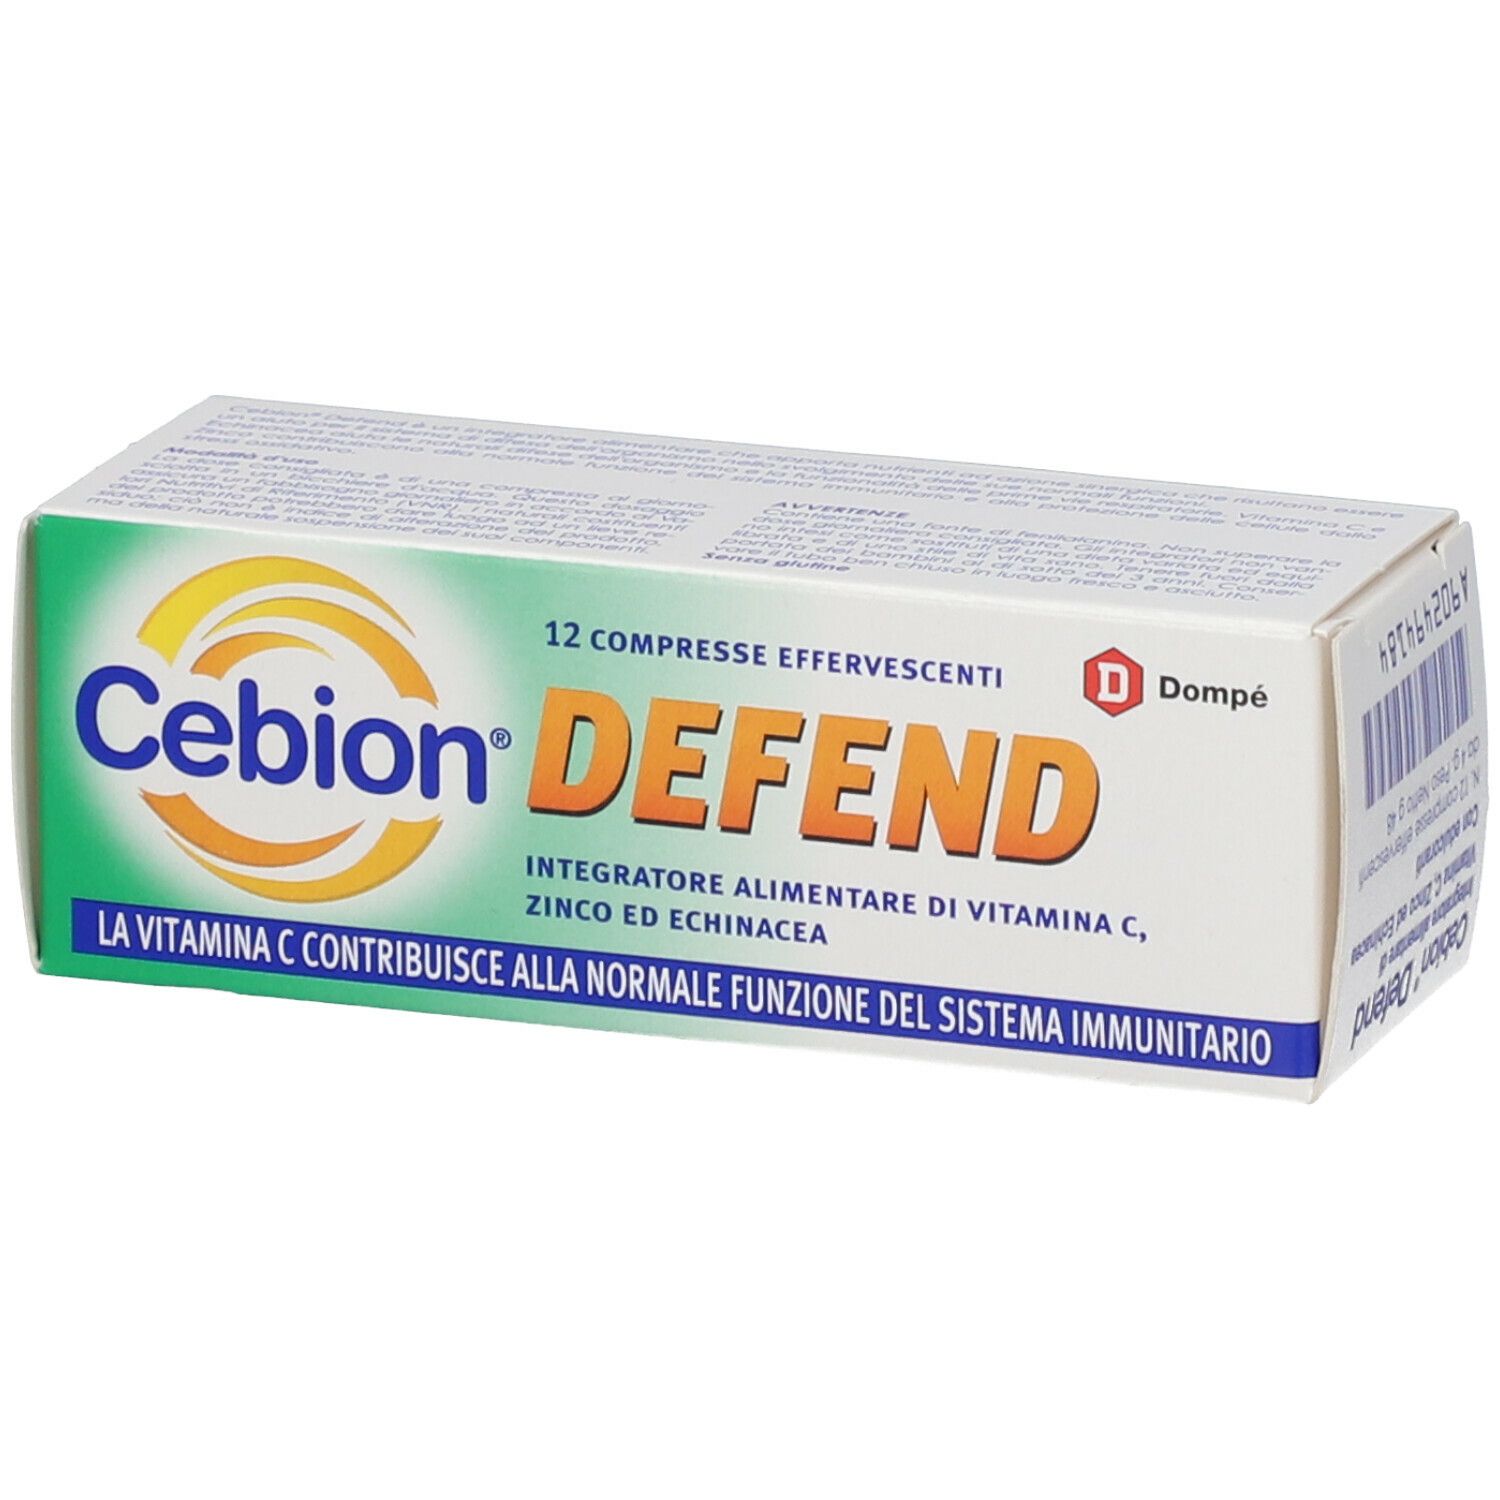 Cebion® Defend Compresse Effervescenti